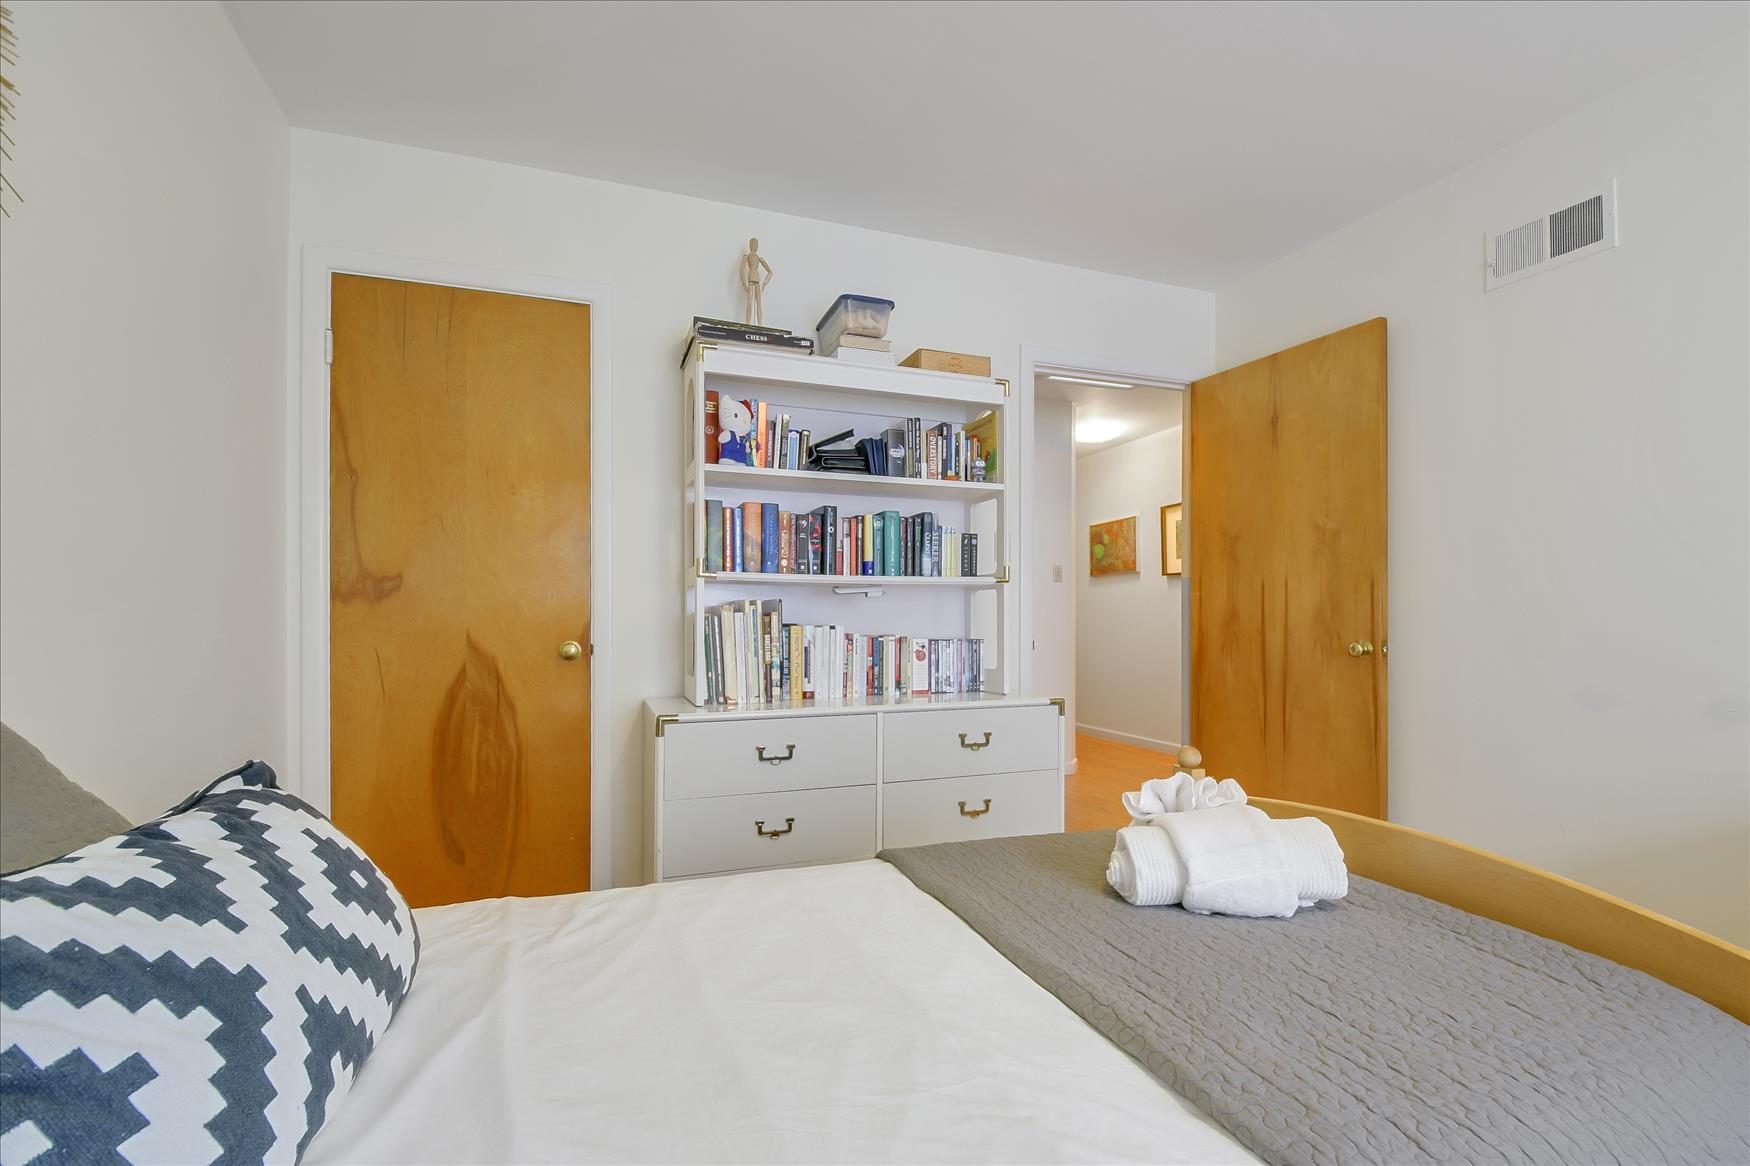 San Francisco, California, 3 Bedrooms Bedrooms, ,2 BathroomsBathrooms,Flat,Furnished,Leavenworth,2,1173